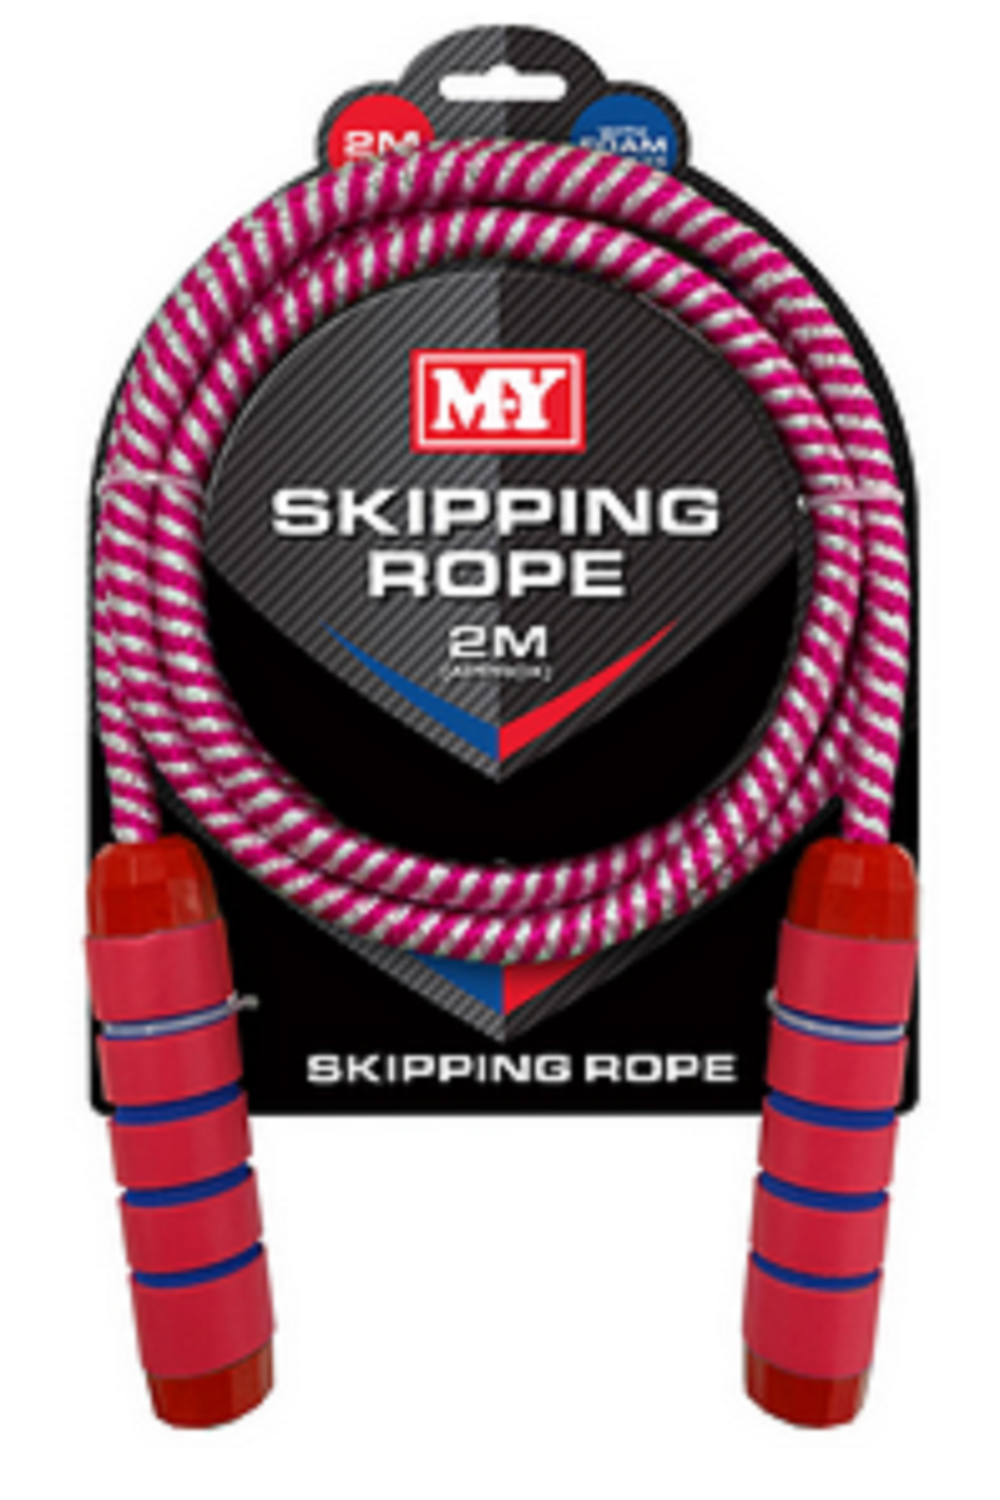 M.Y Skipping Rope